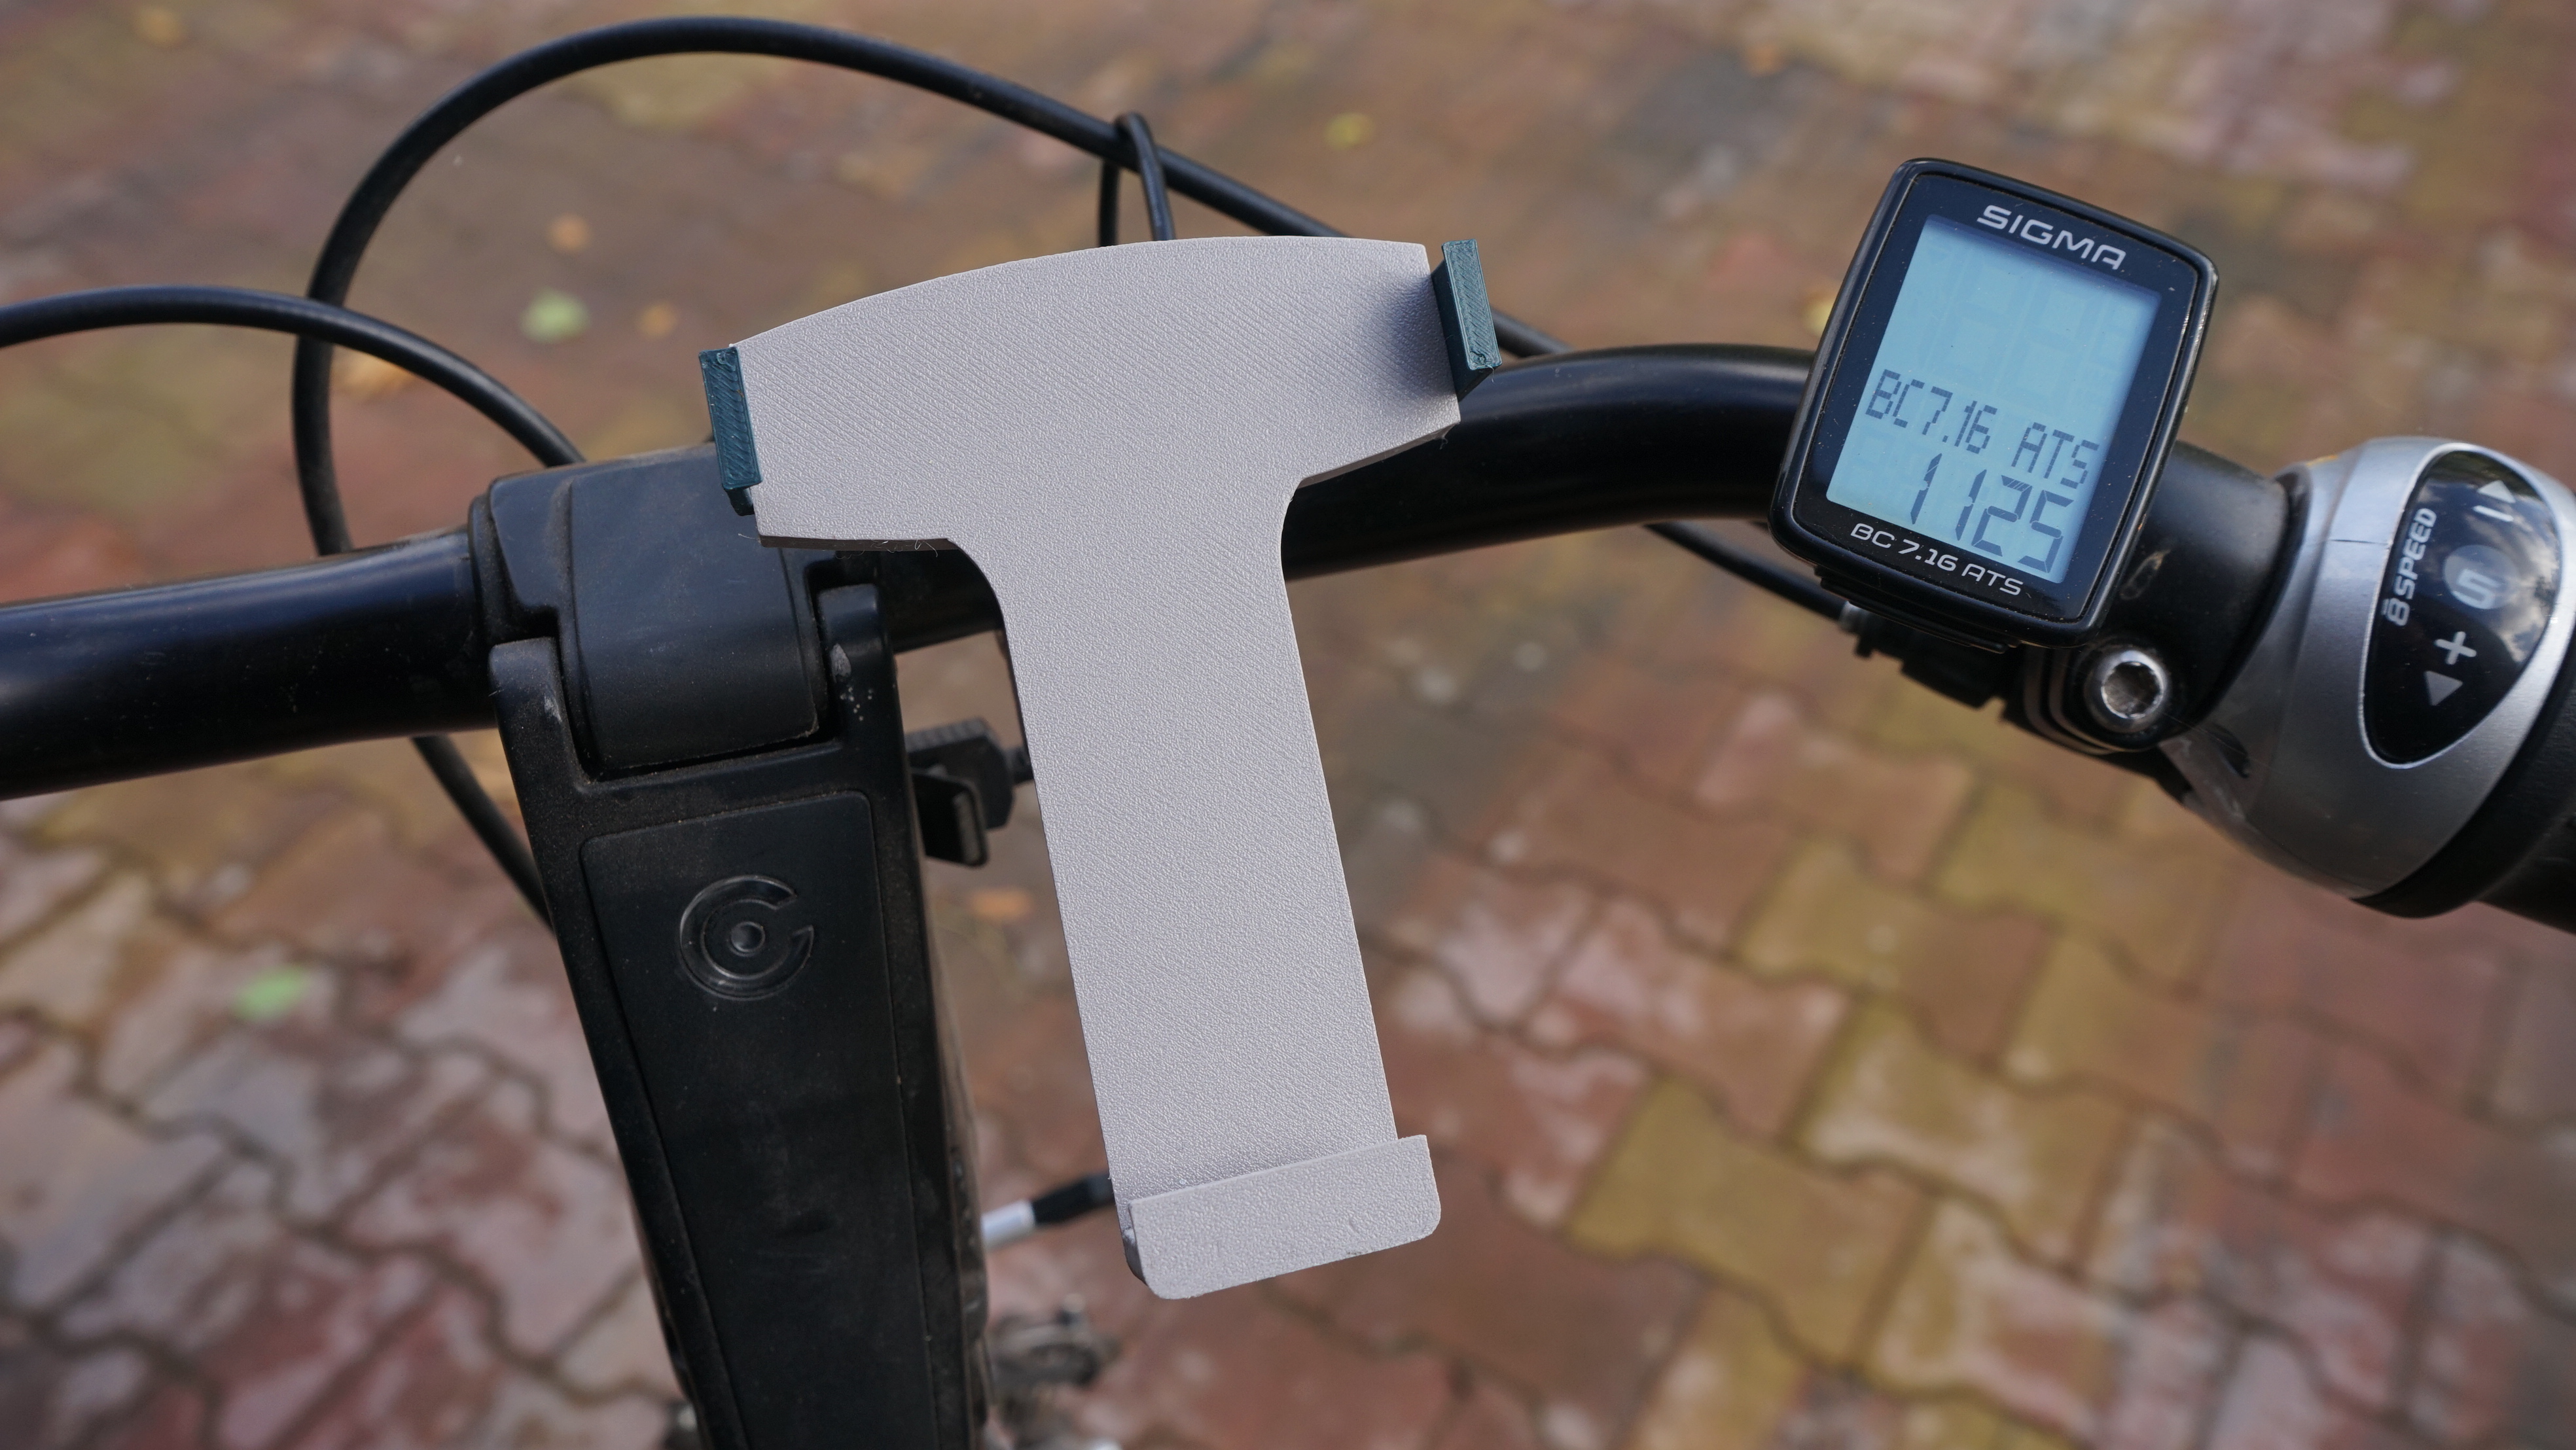 Phone Holder for bike. Parametric FreeCad.